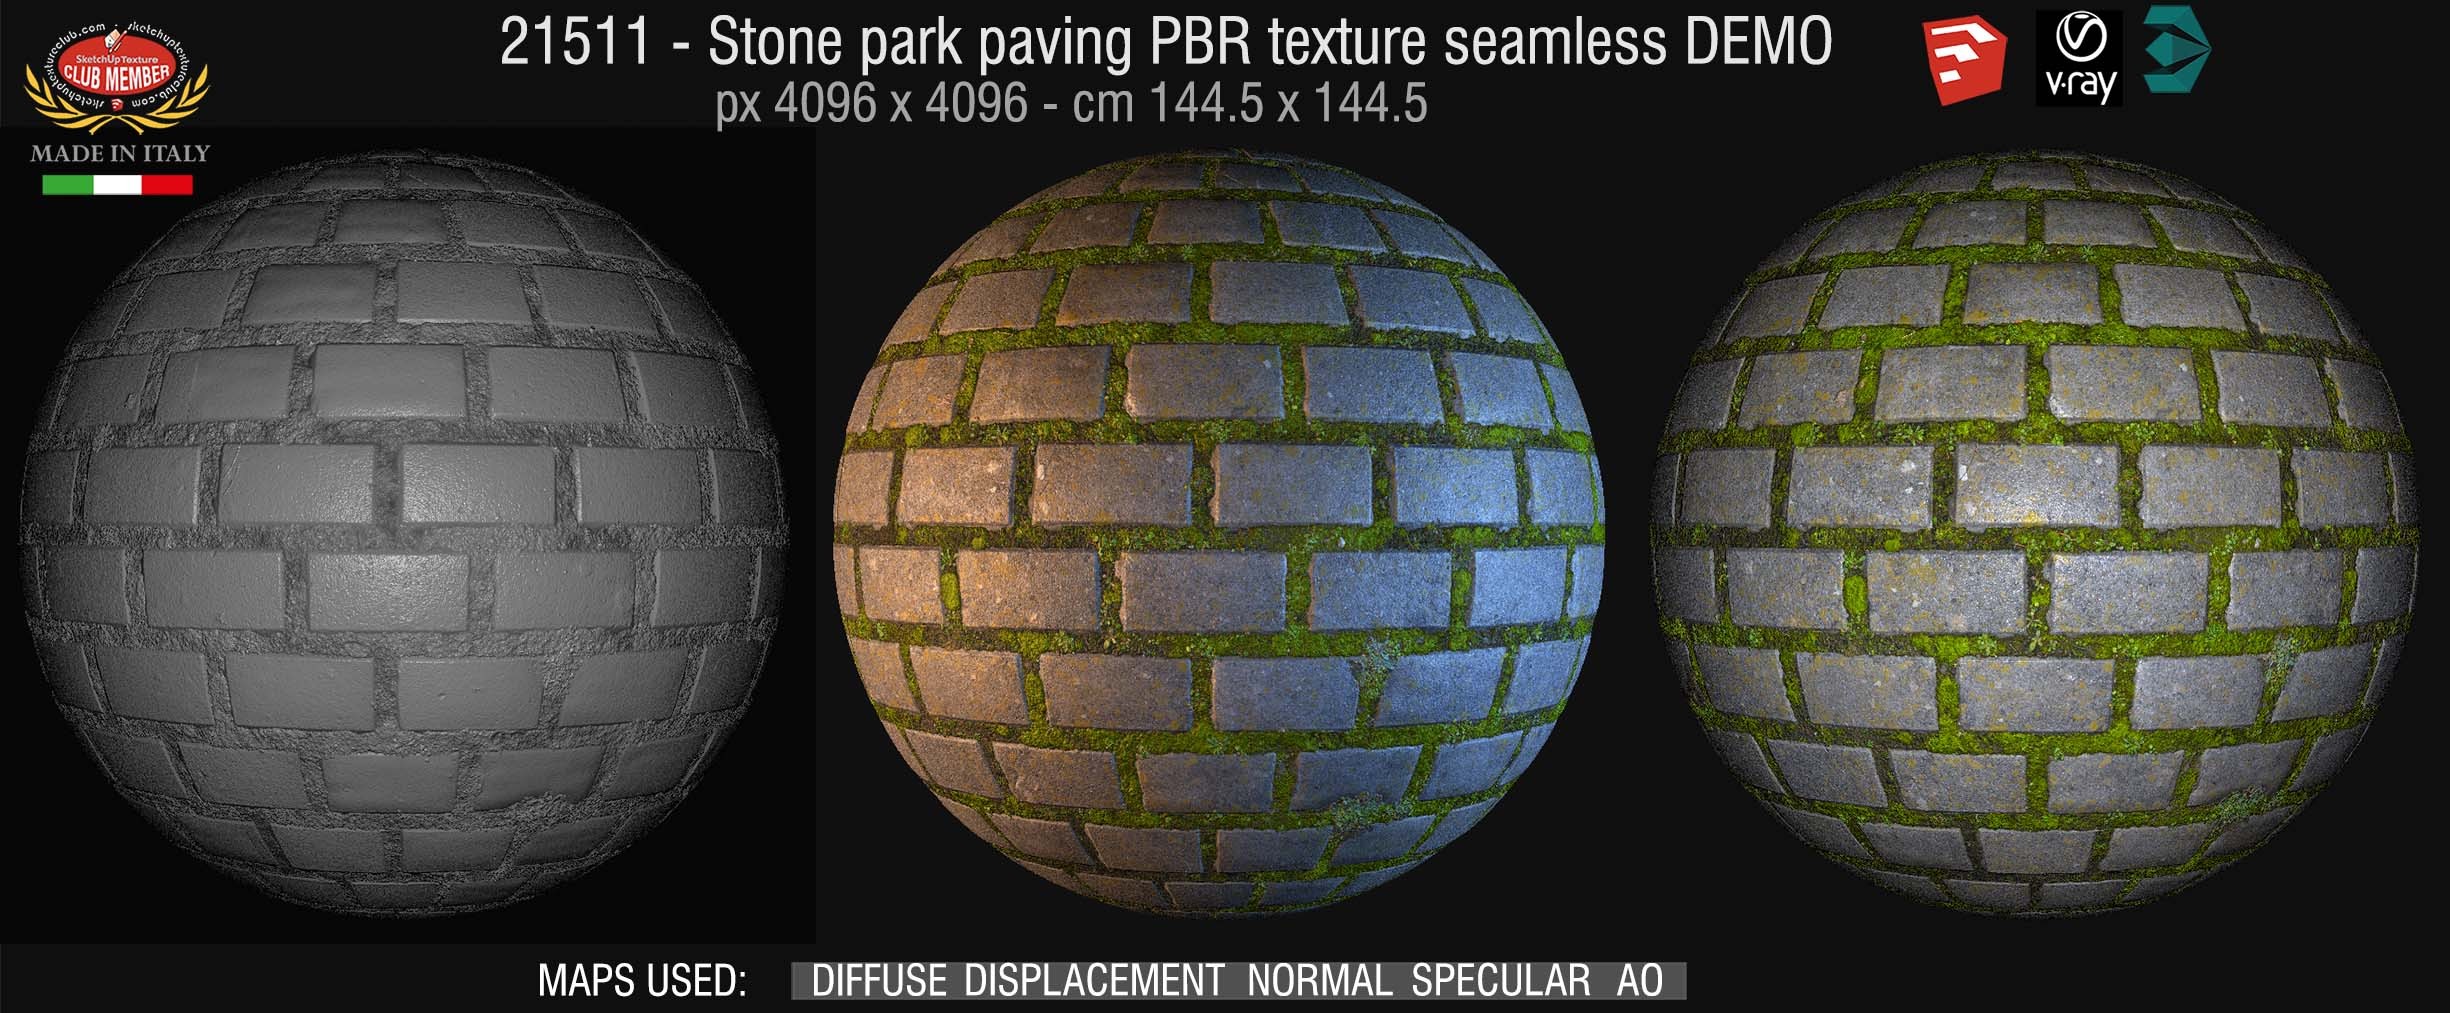 21511 stone park paving PBR texture seamless DEMO